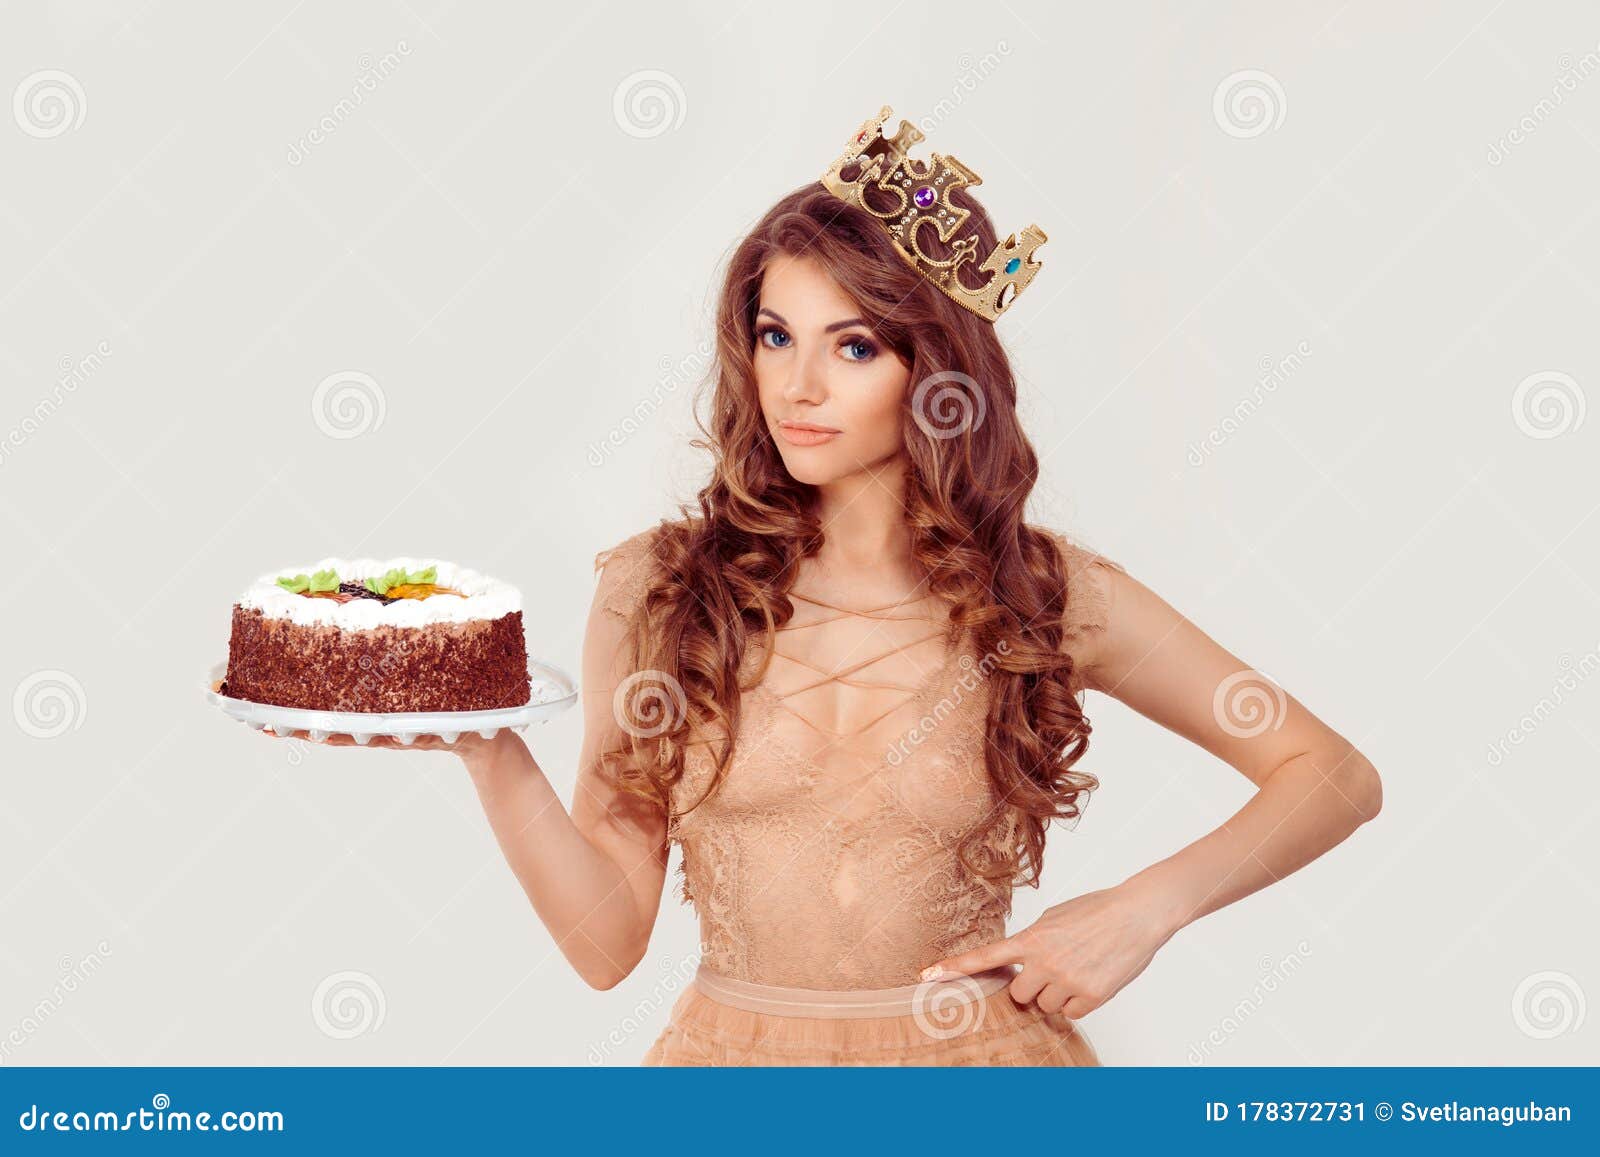 naked girl with birthday cake